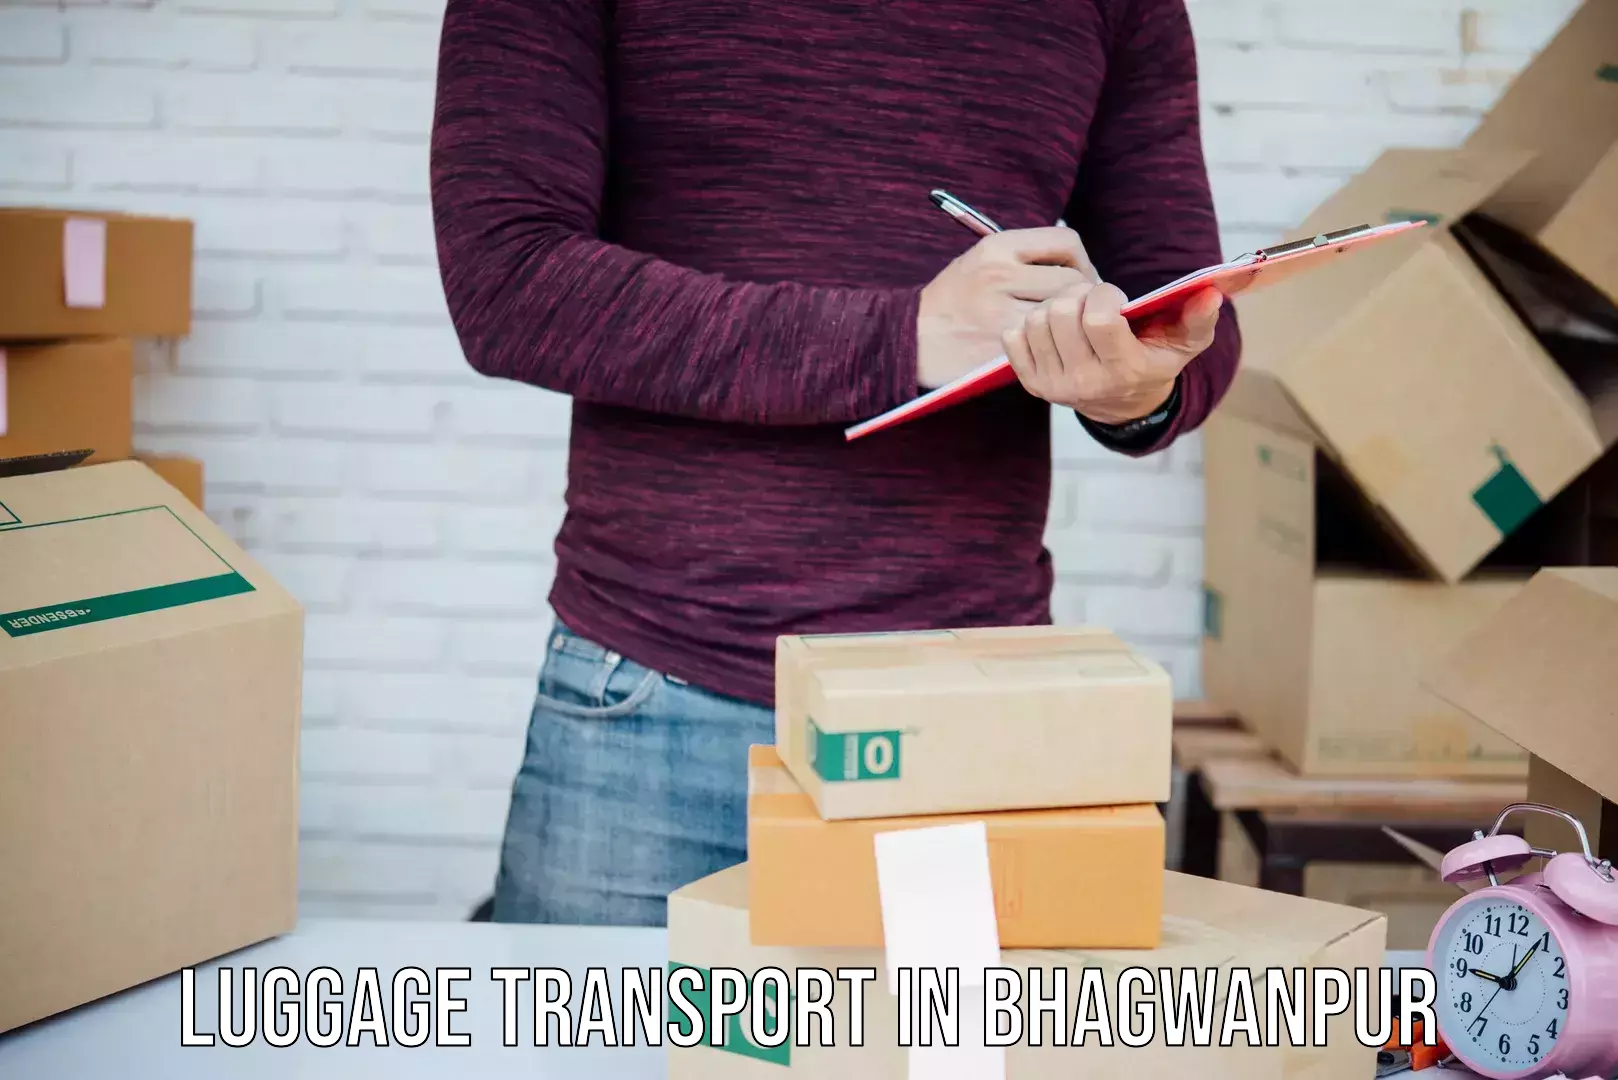 Professional baggage transport in Bhagwanpur